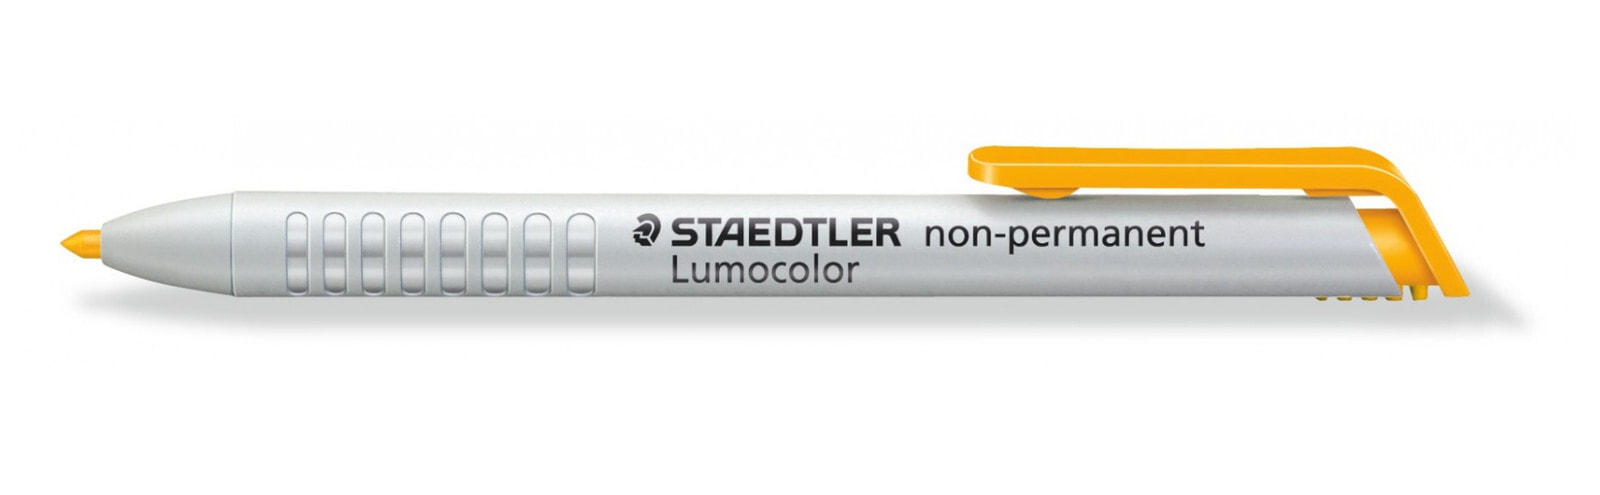 Staedtler Lumocolor 768 перманентная маркер Желтый Пулевидный наконечник 1 шт 768N-1